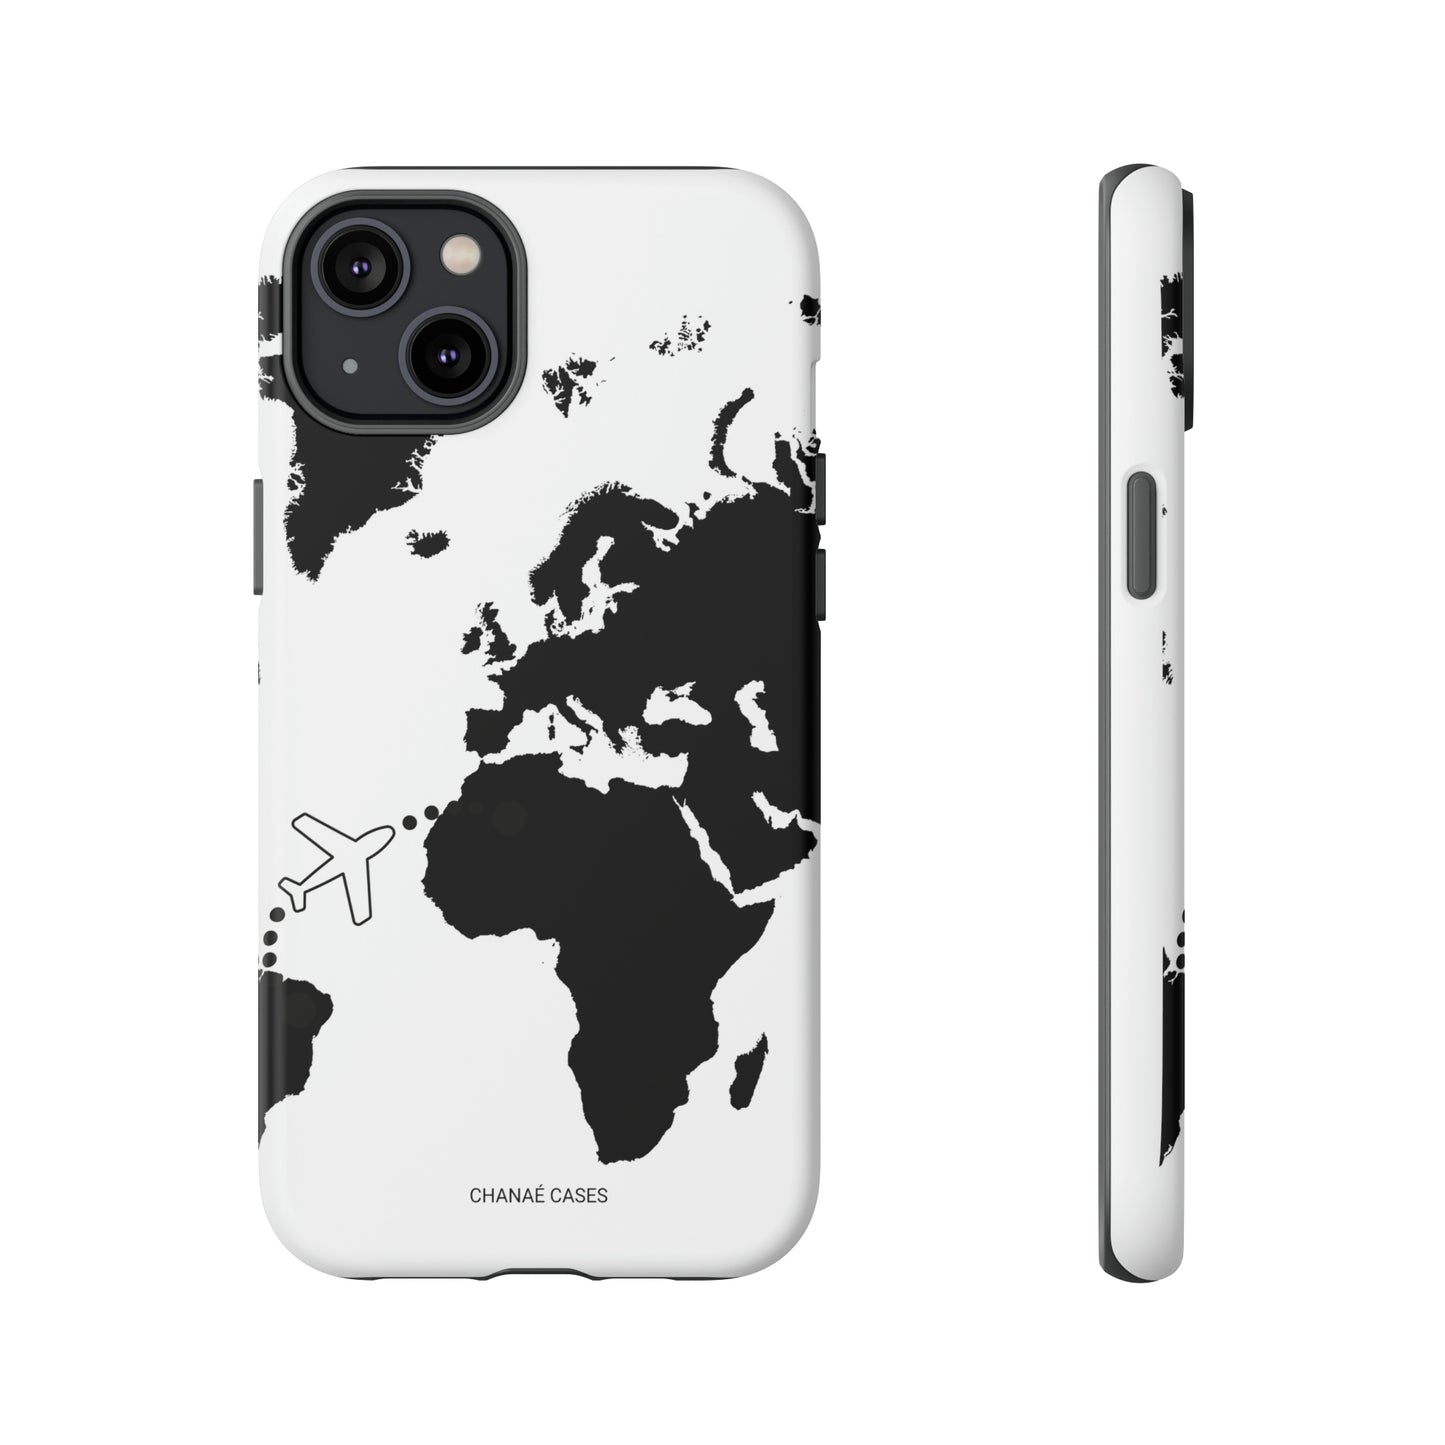 Next Destination iPhone "Tough" Case (White)